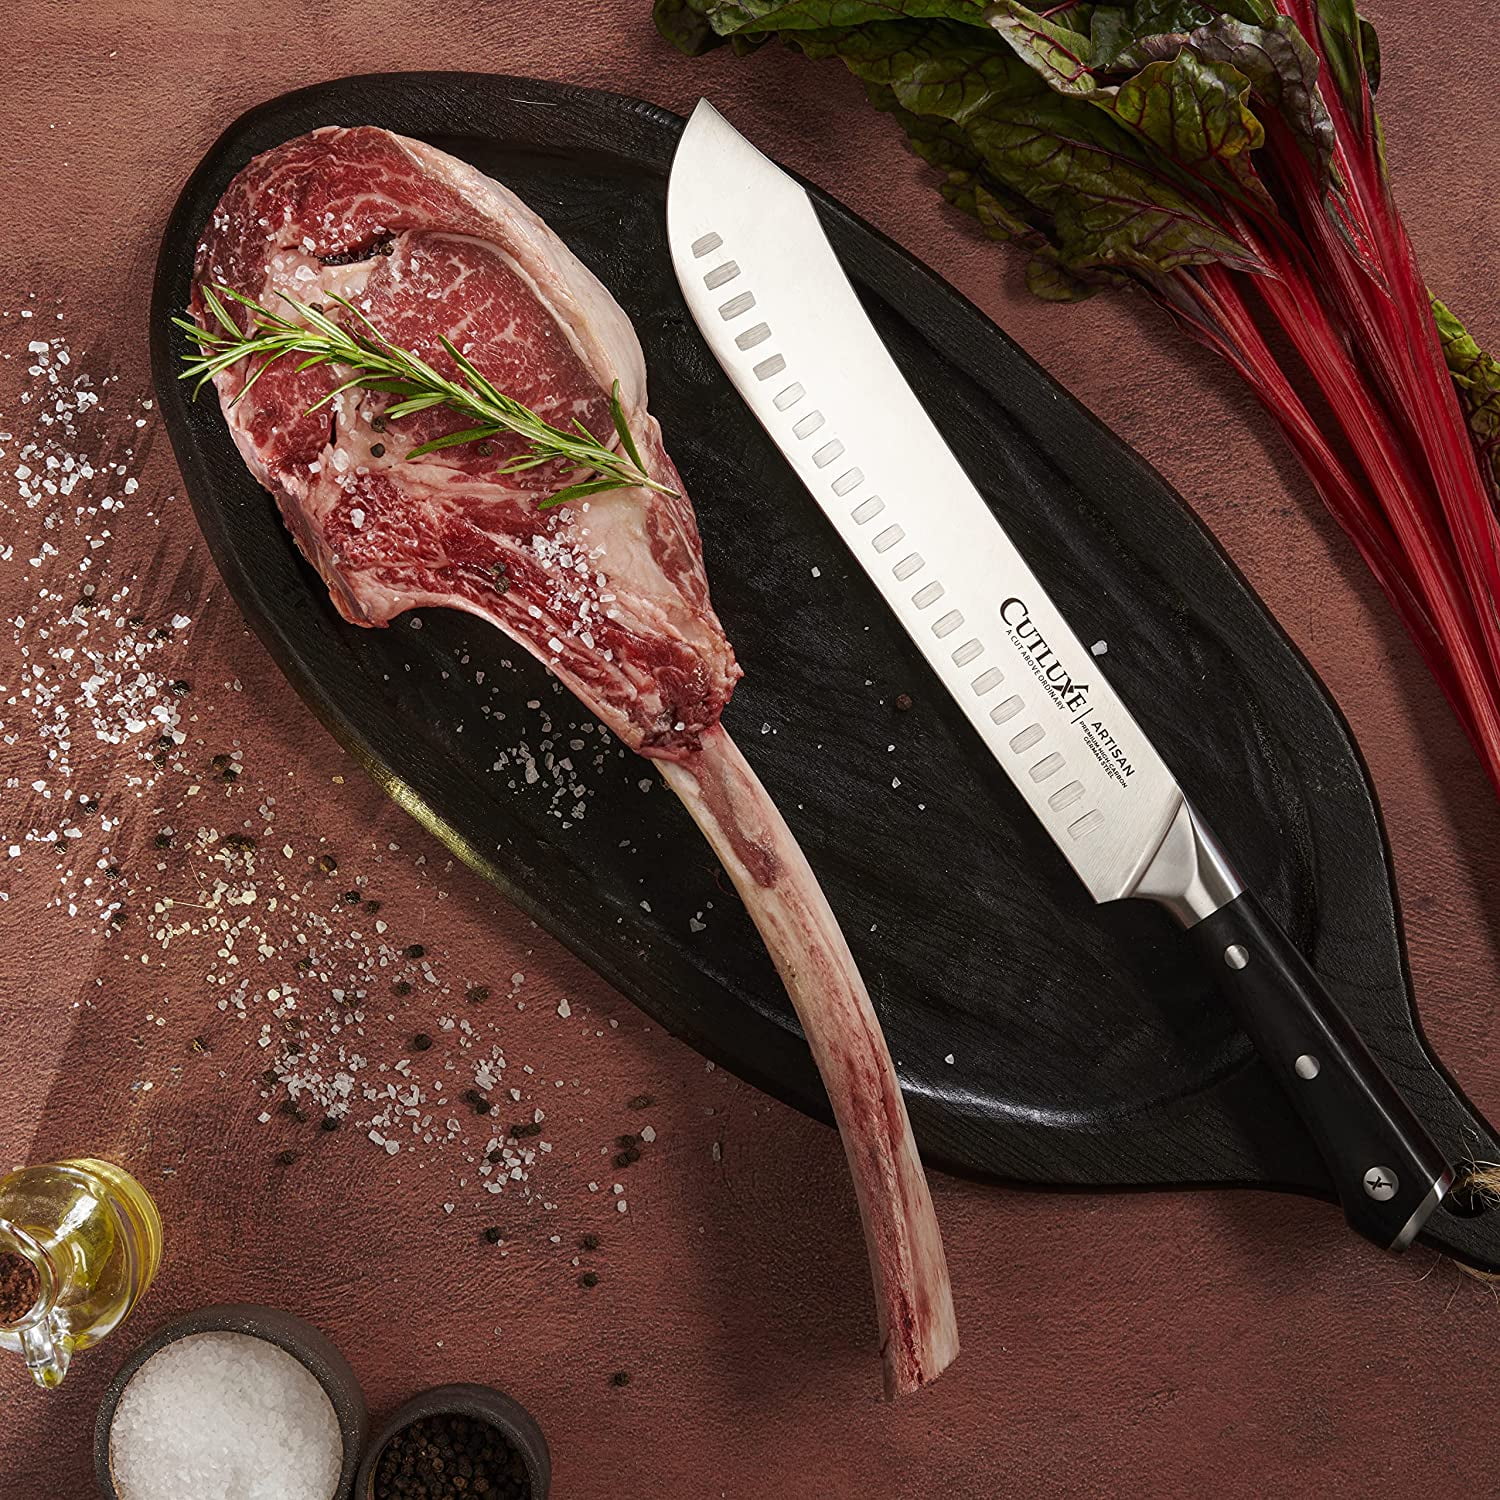 Cutluxe's Bullnose Butcher Knife Slices Through Even the Toughest Produce